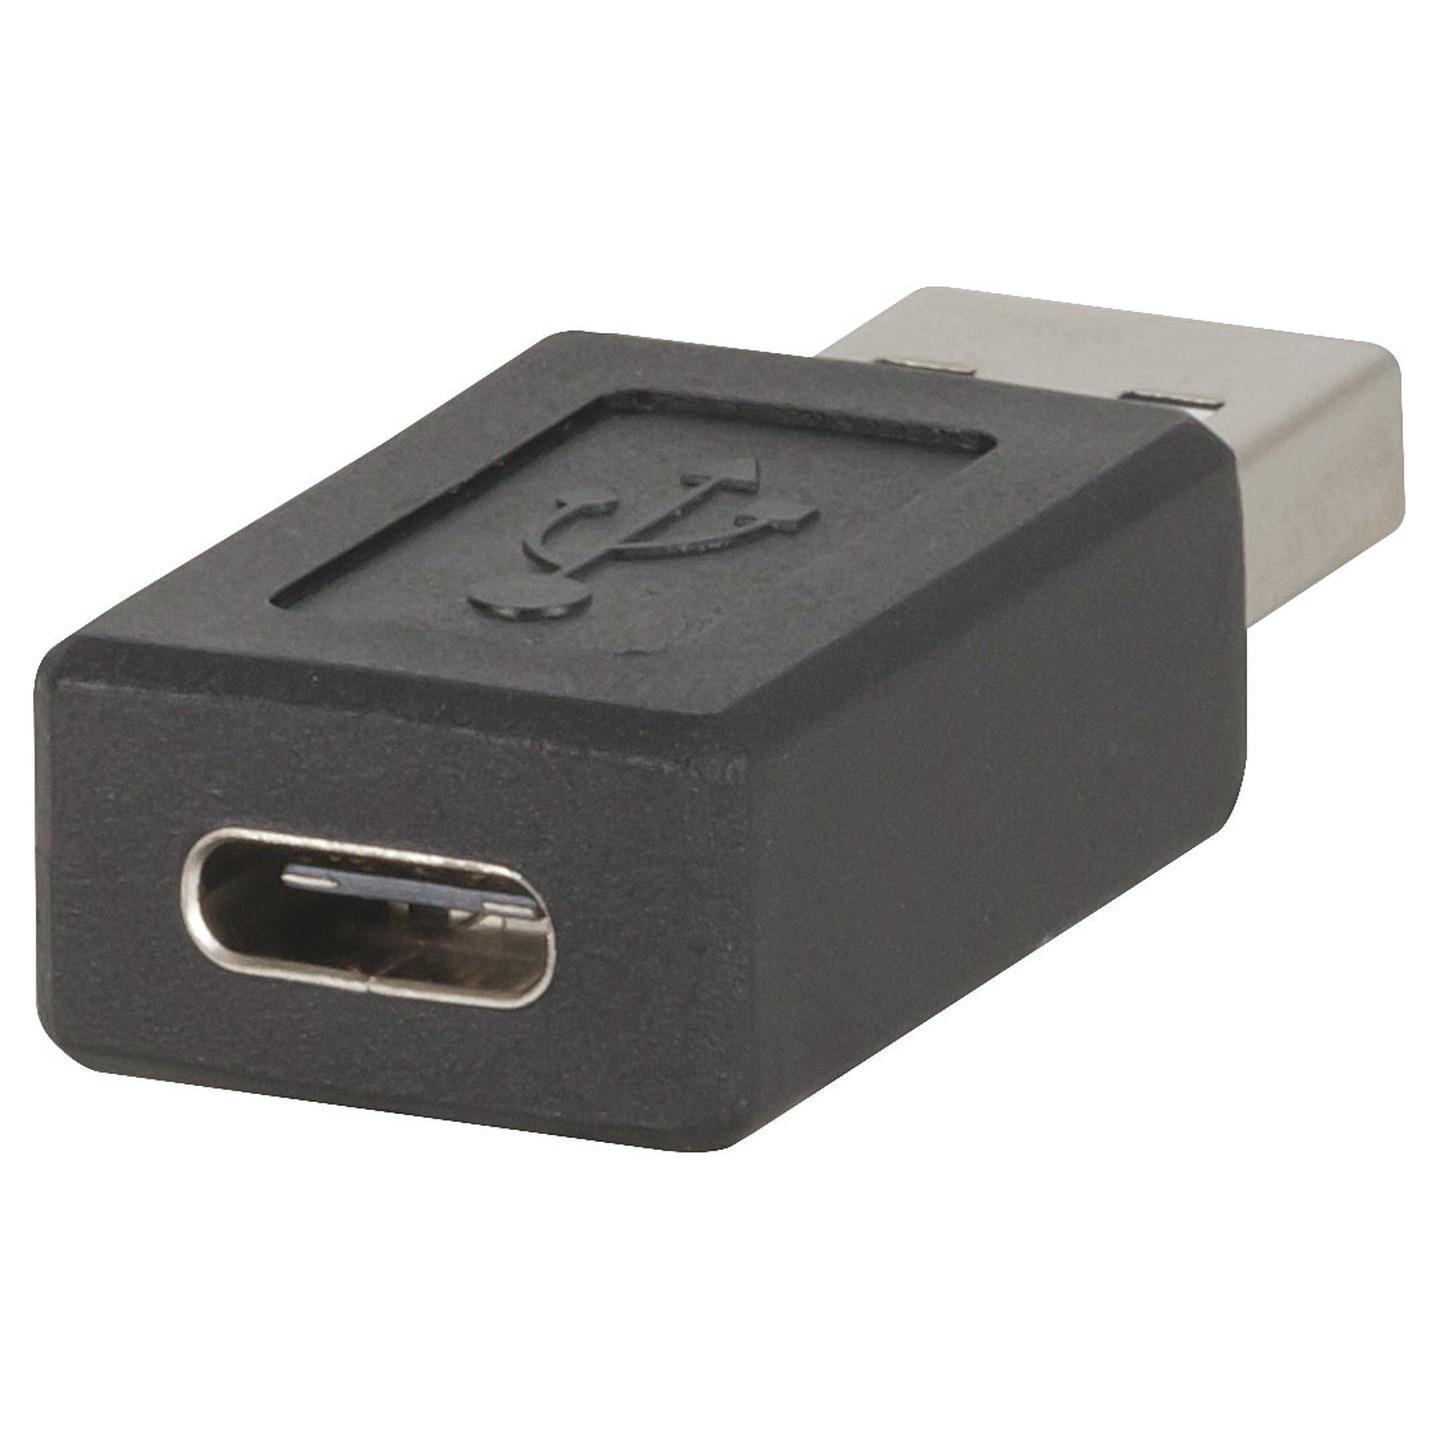 USB 3.0 A Plug to Type-C Socket Adaptor